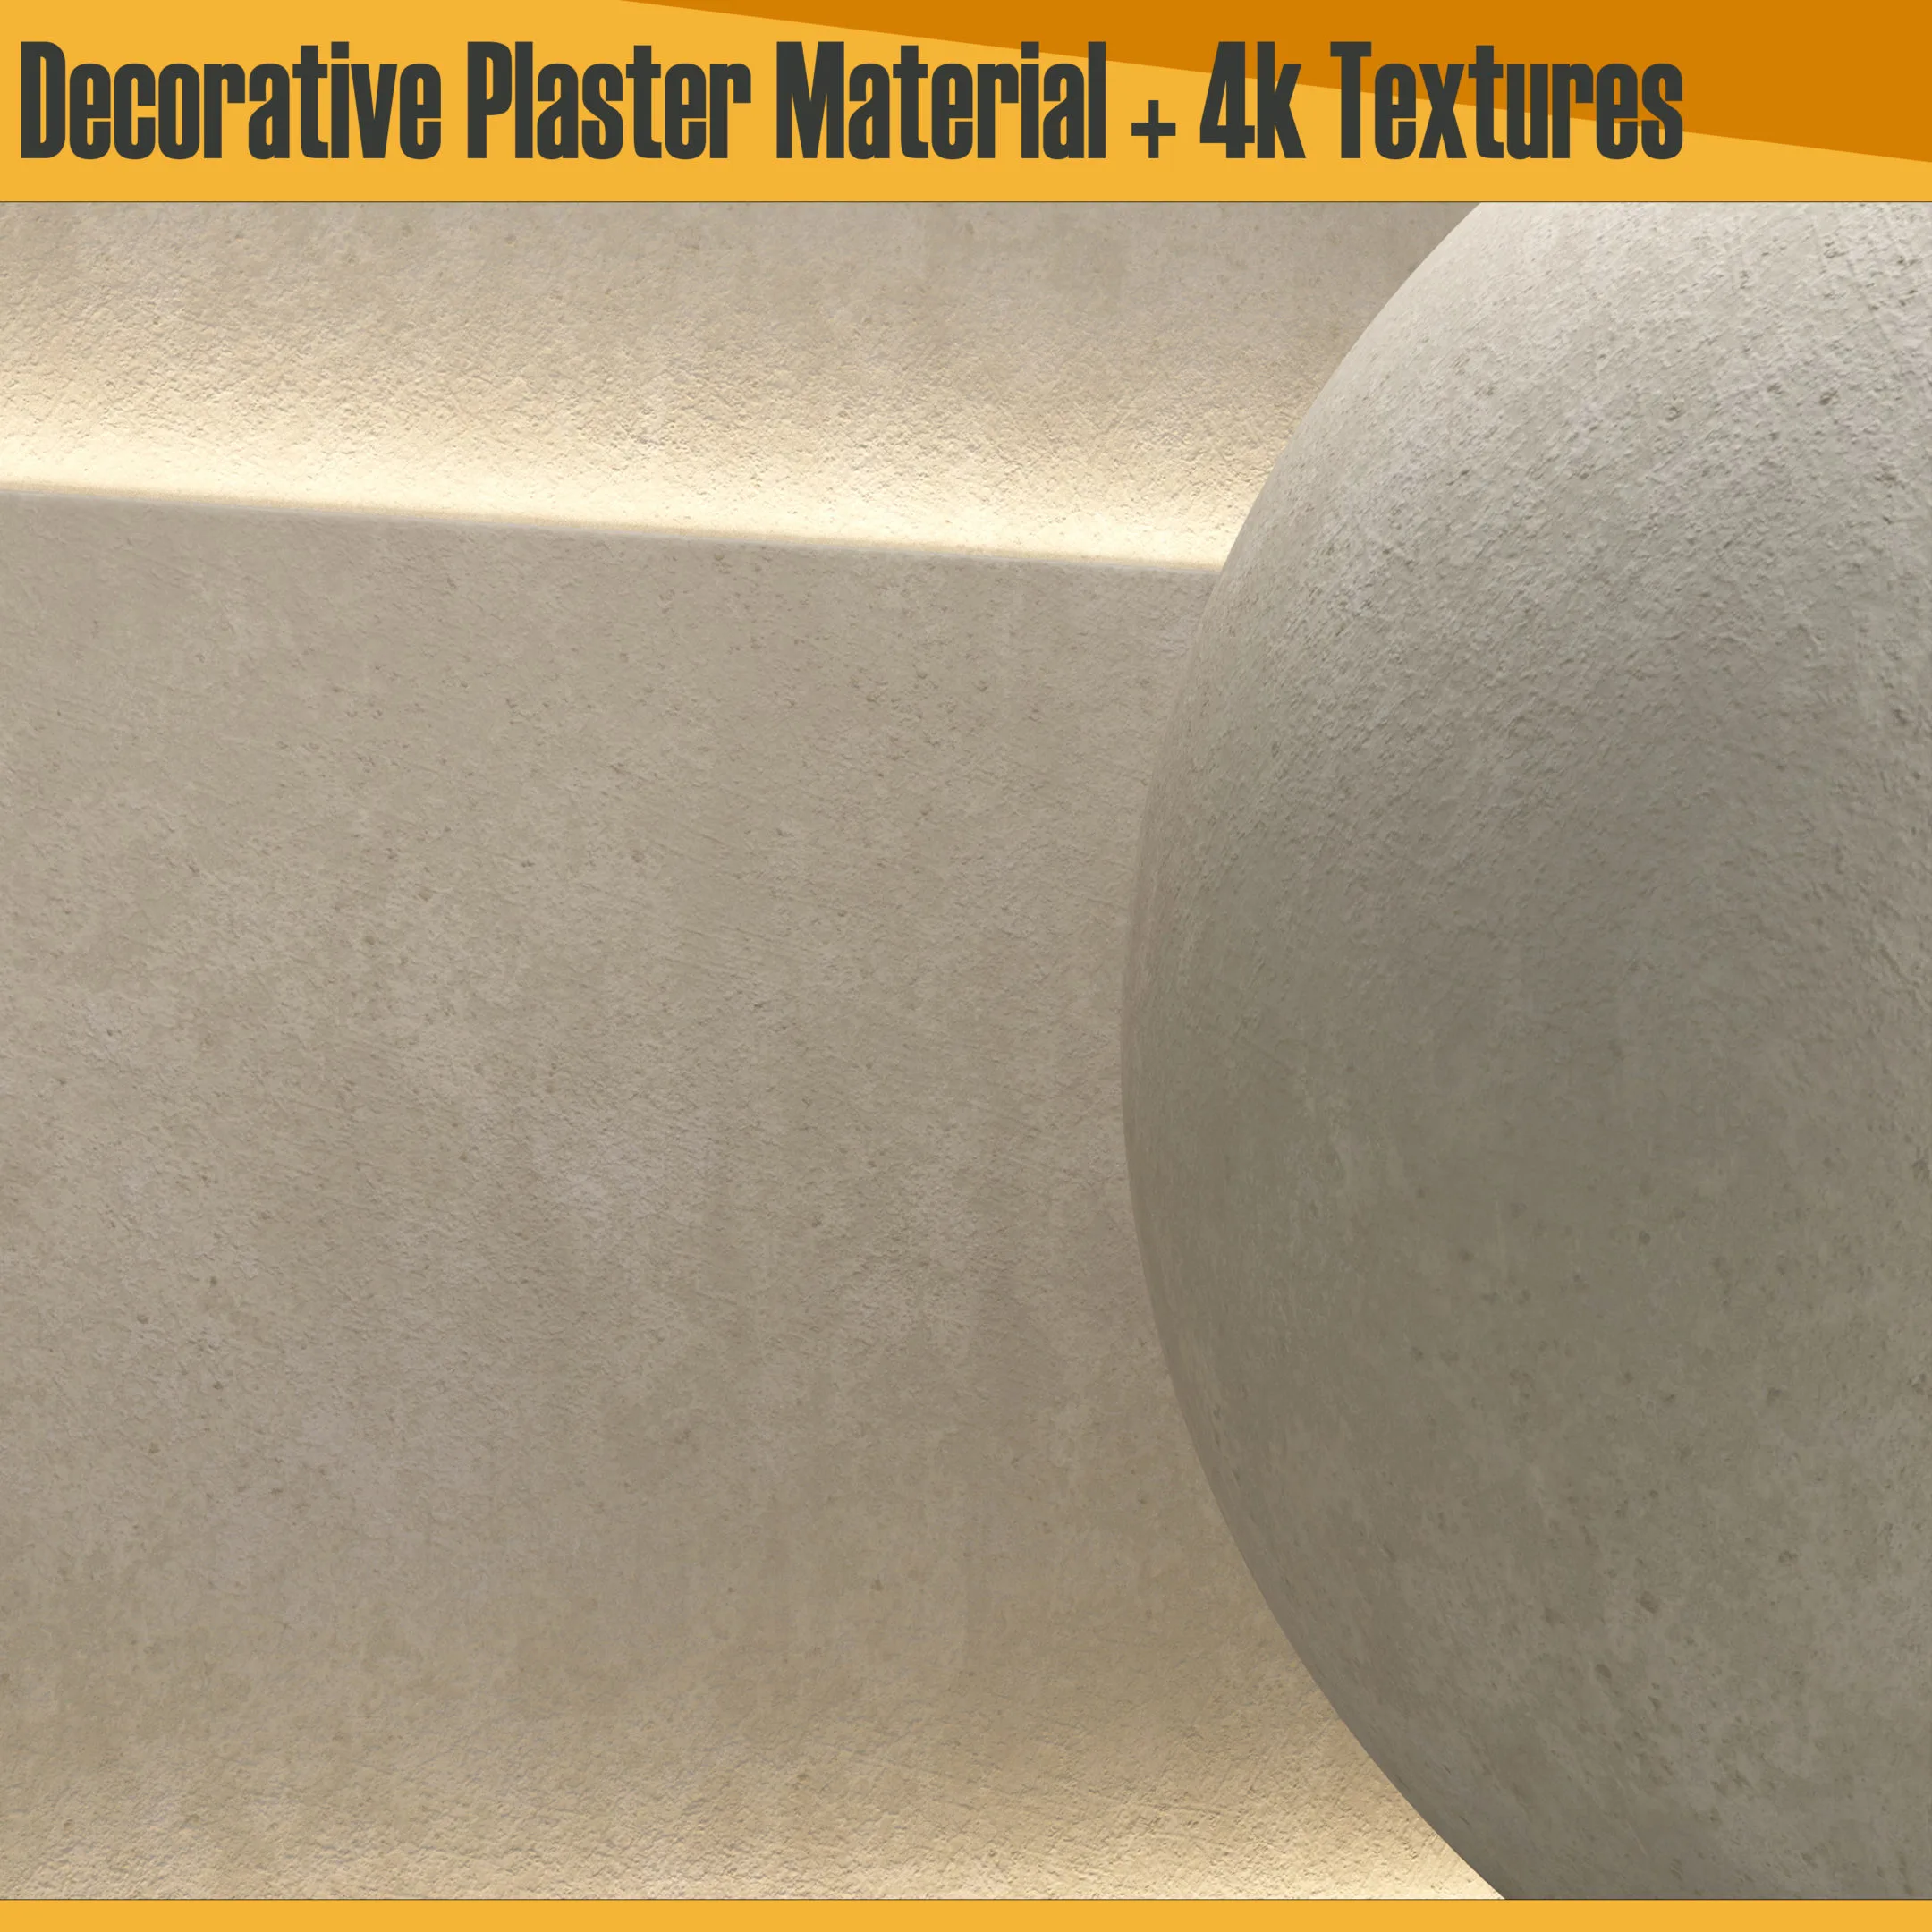 Decorative Plaster Material + 4k Textures